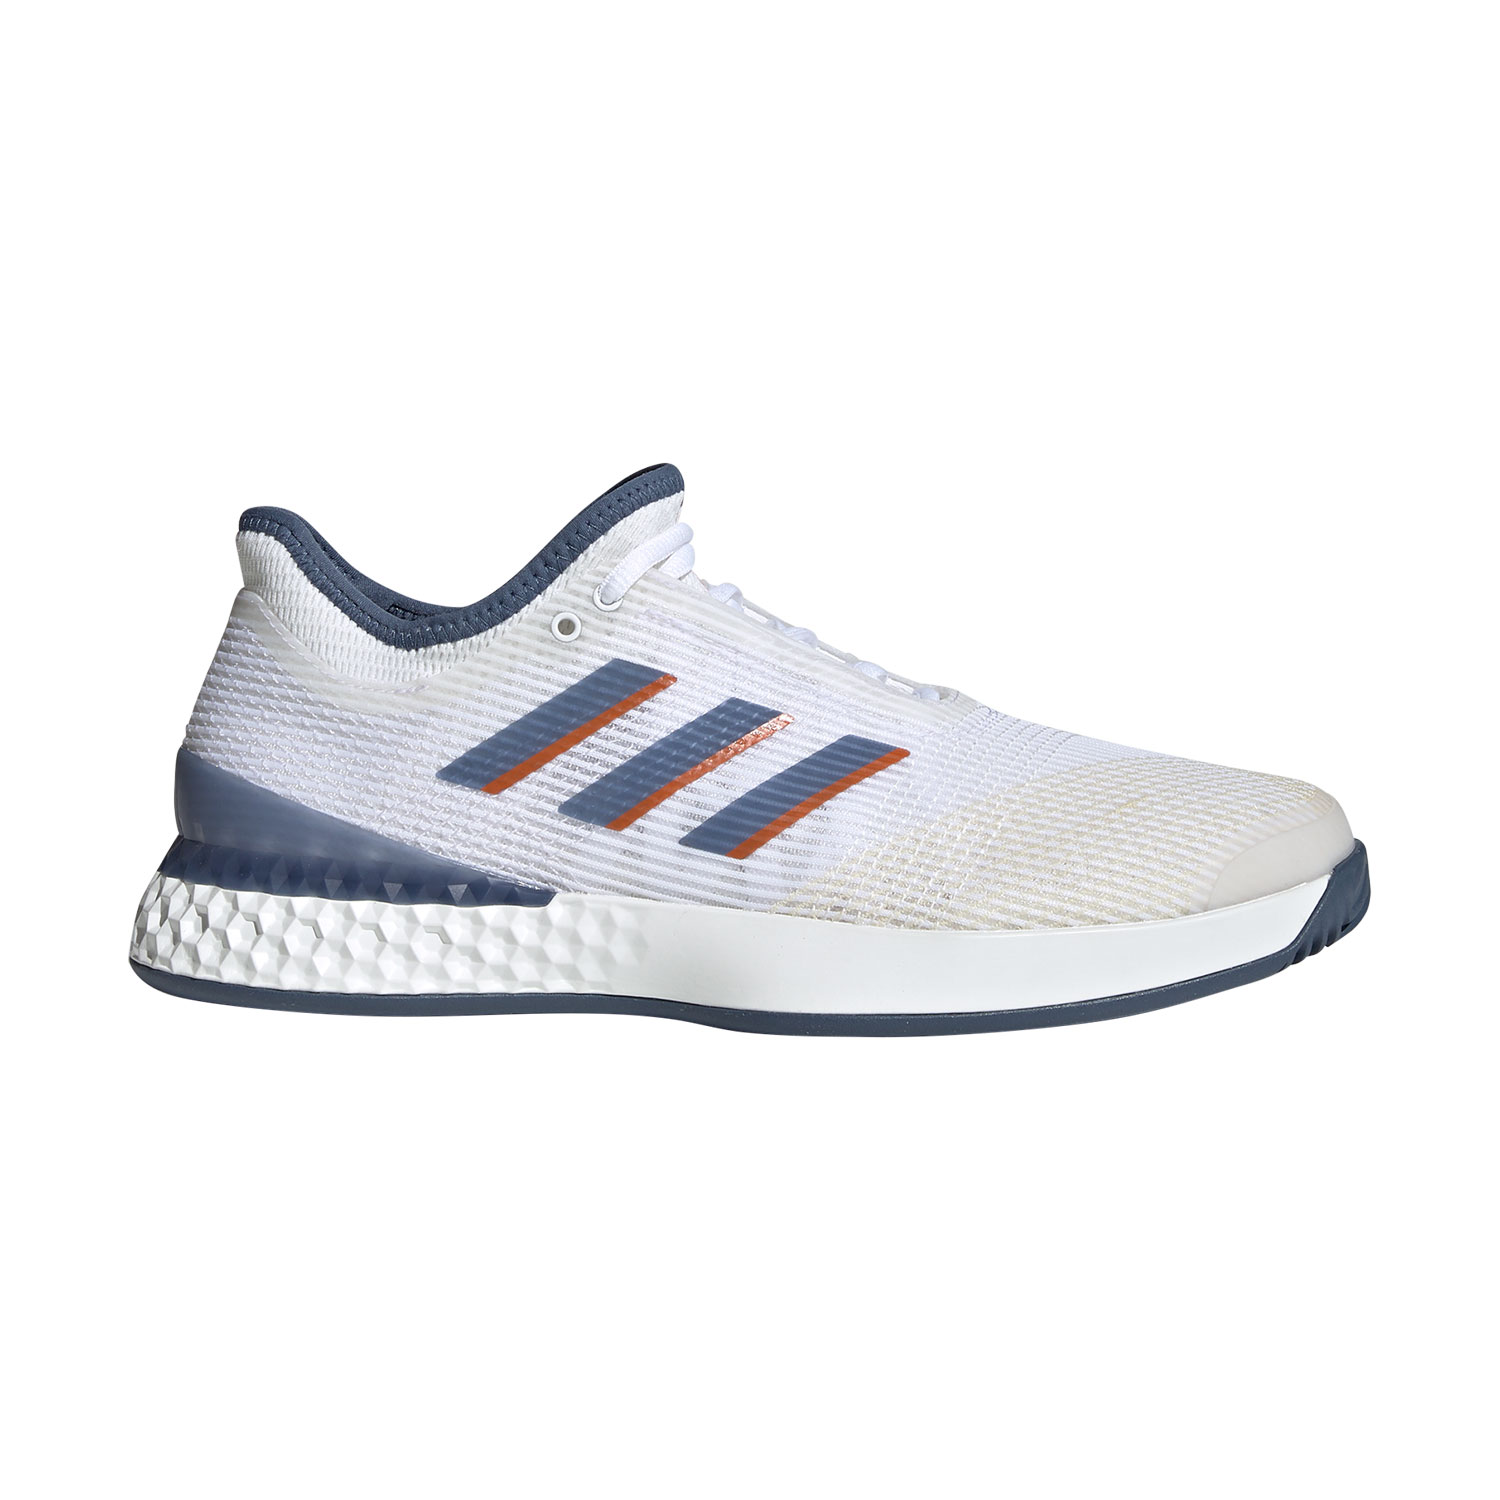 adidas Adizero Ubersonic 3.0 Men's Tennis Shoes - White